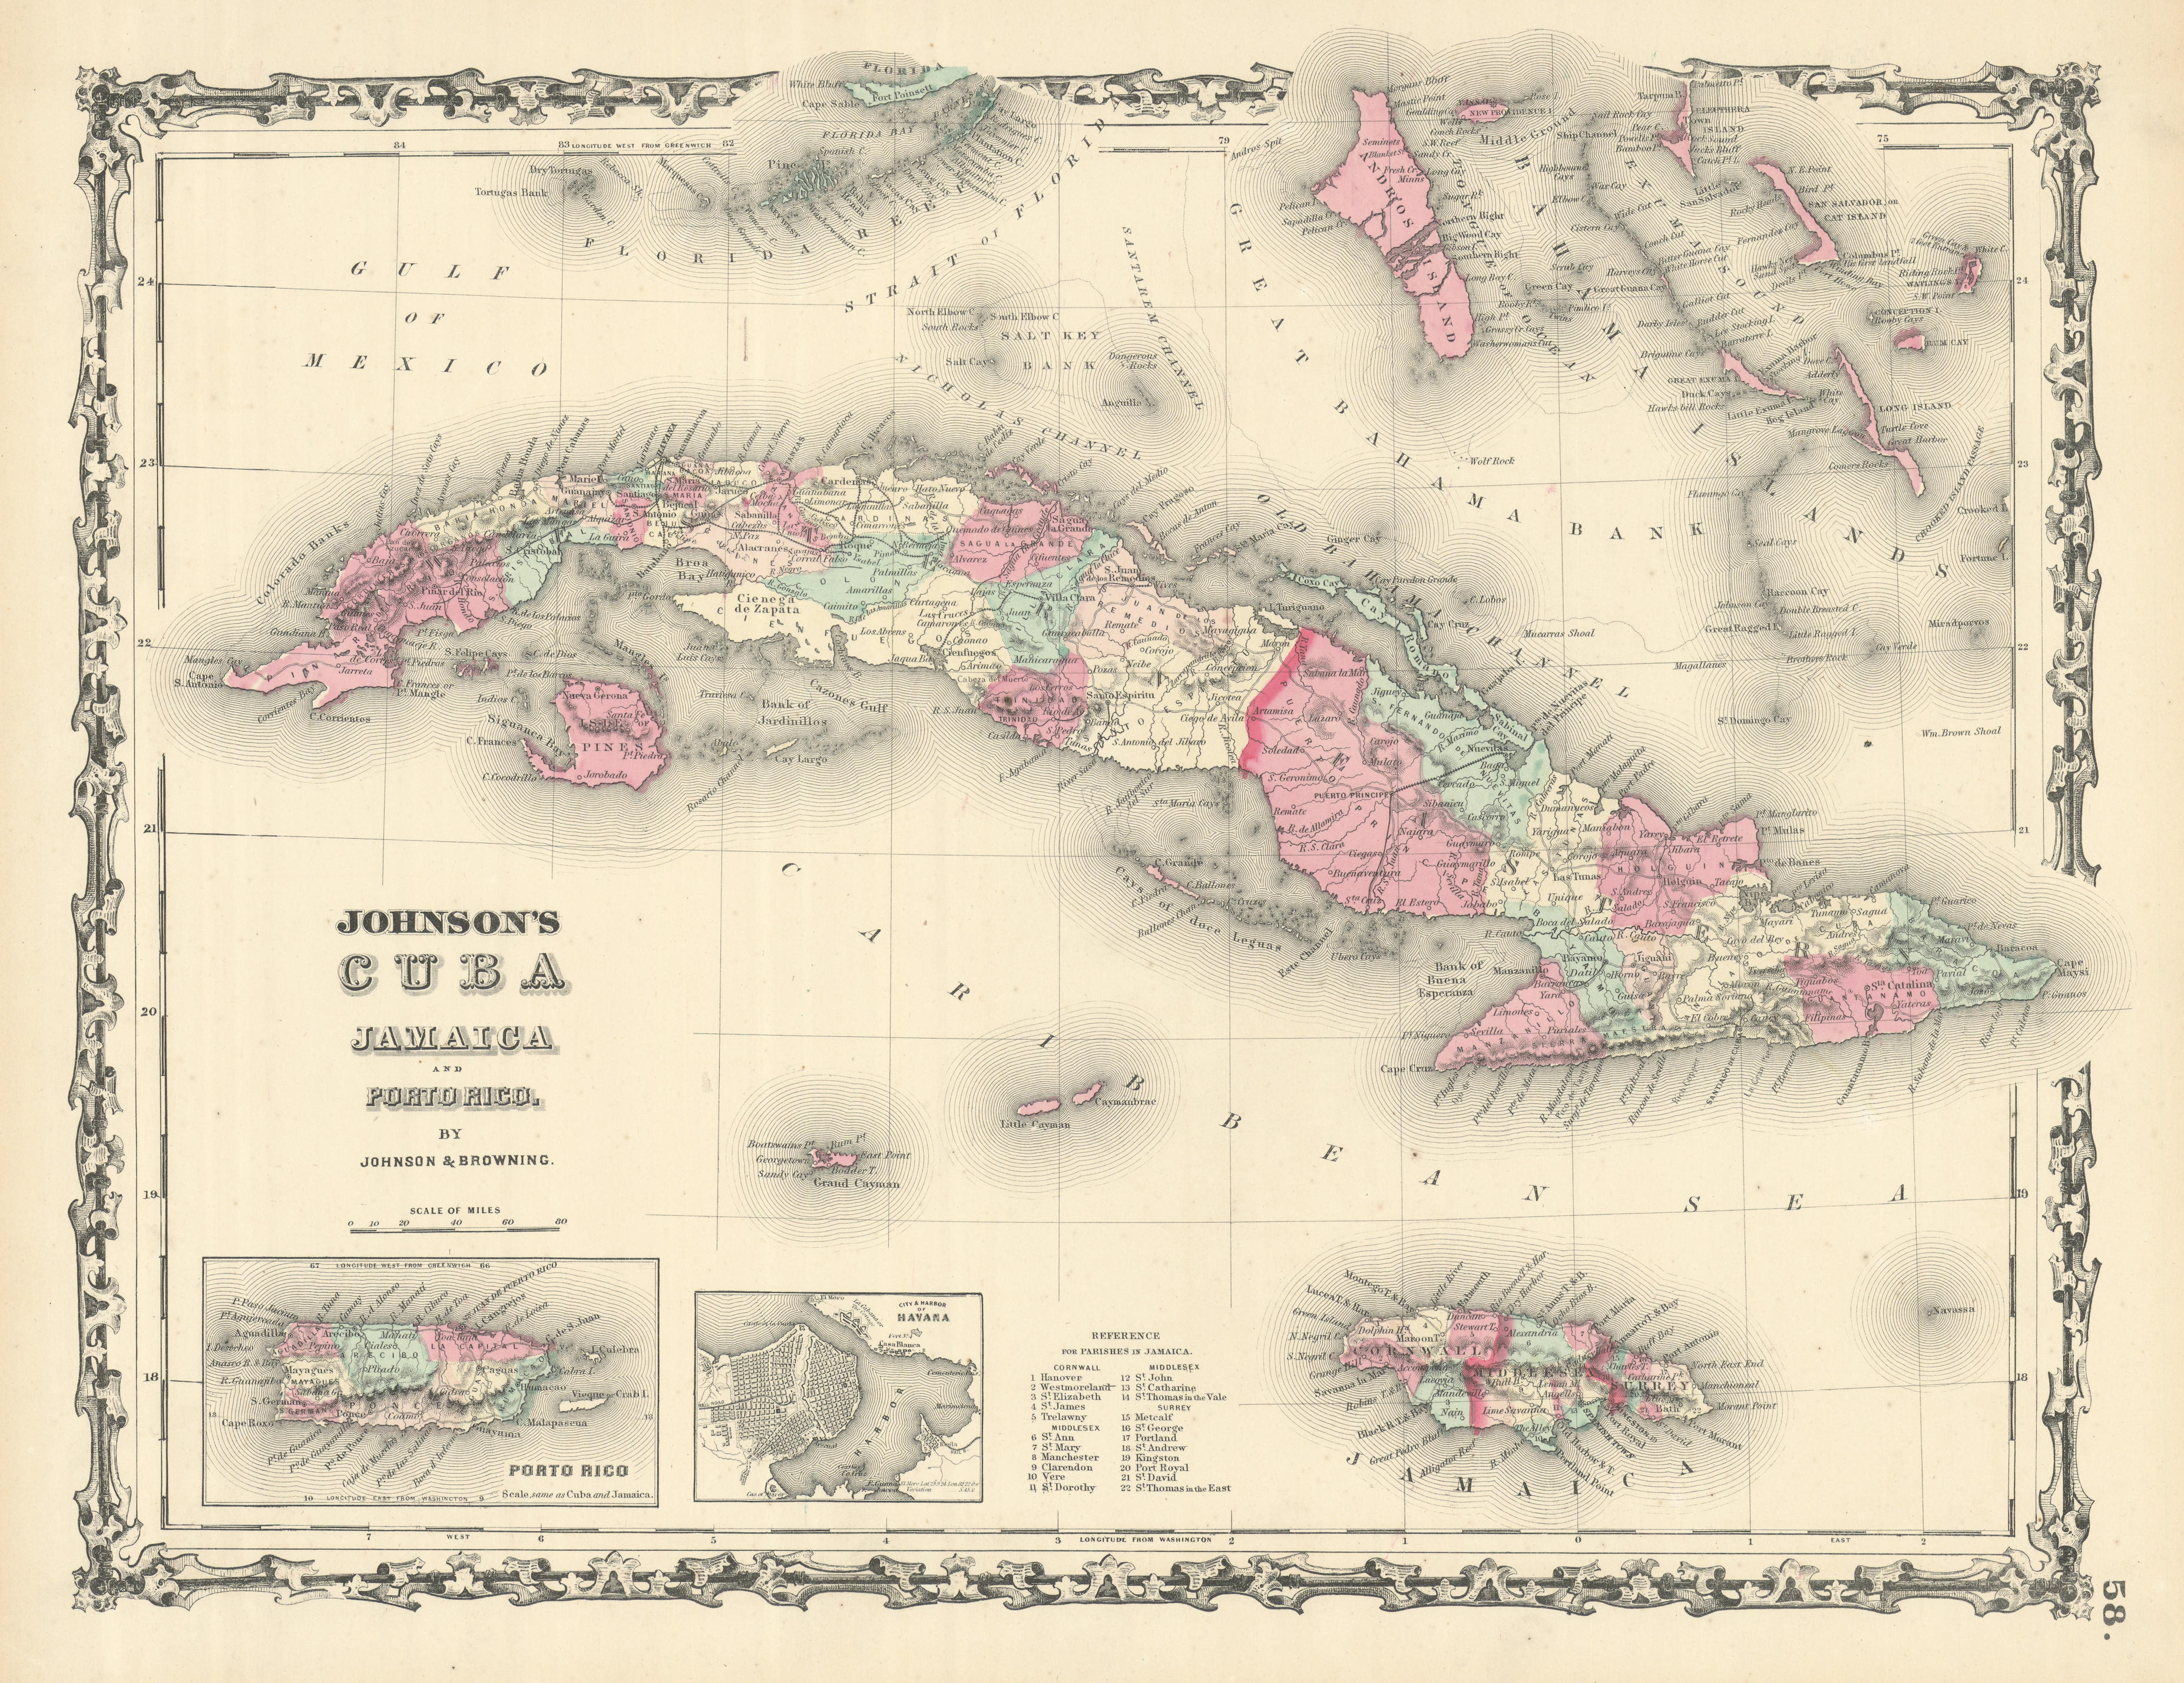 Associate Product Johnson's Cuba, Jamaica & Porto Rico. Puerto Rico. Bahamas Florida Keys 1861 map